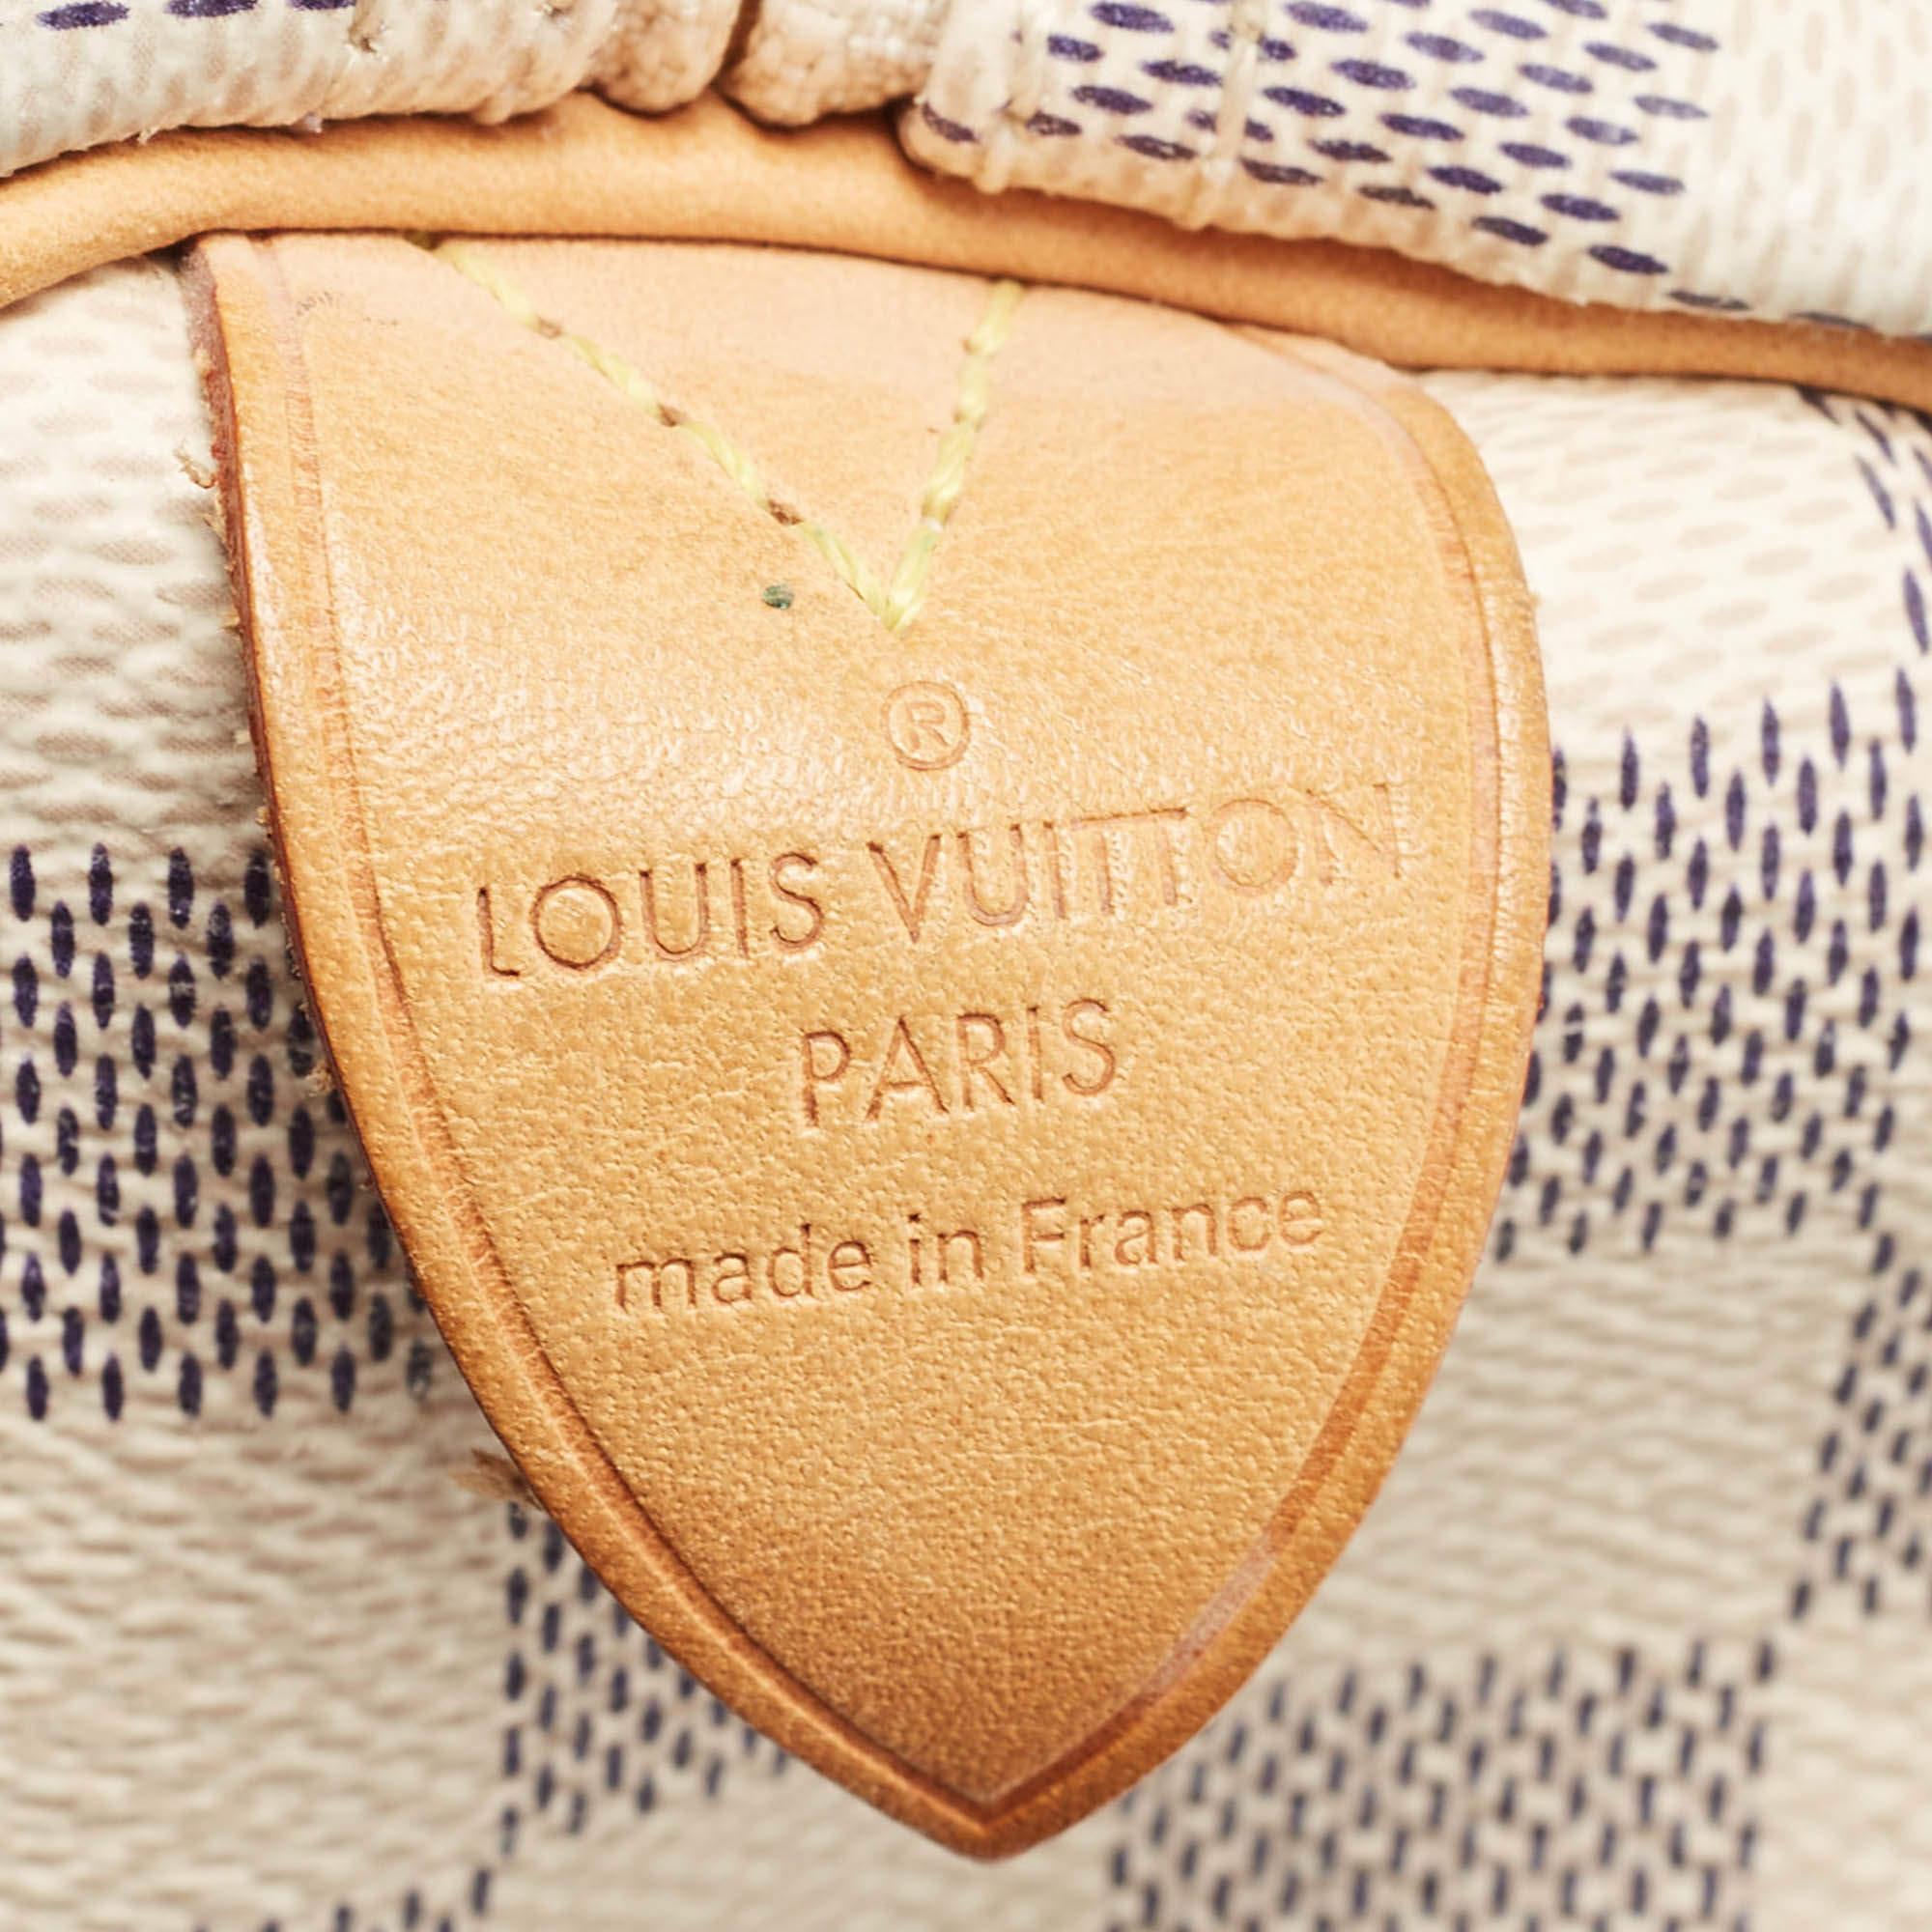 Louis Vuitton Damier Azur Canvas Speedy 25 Bag 3